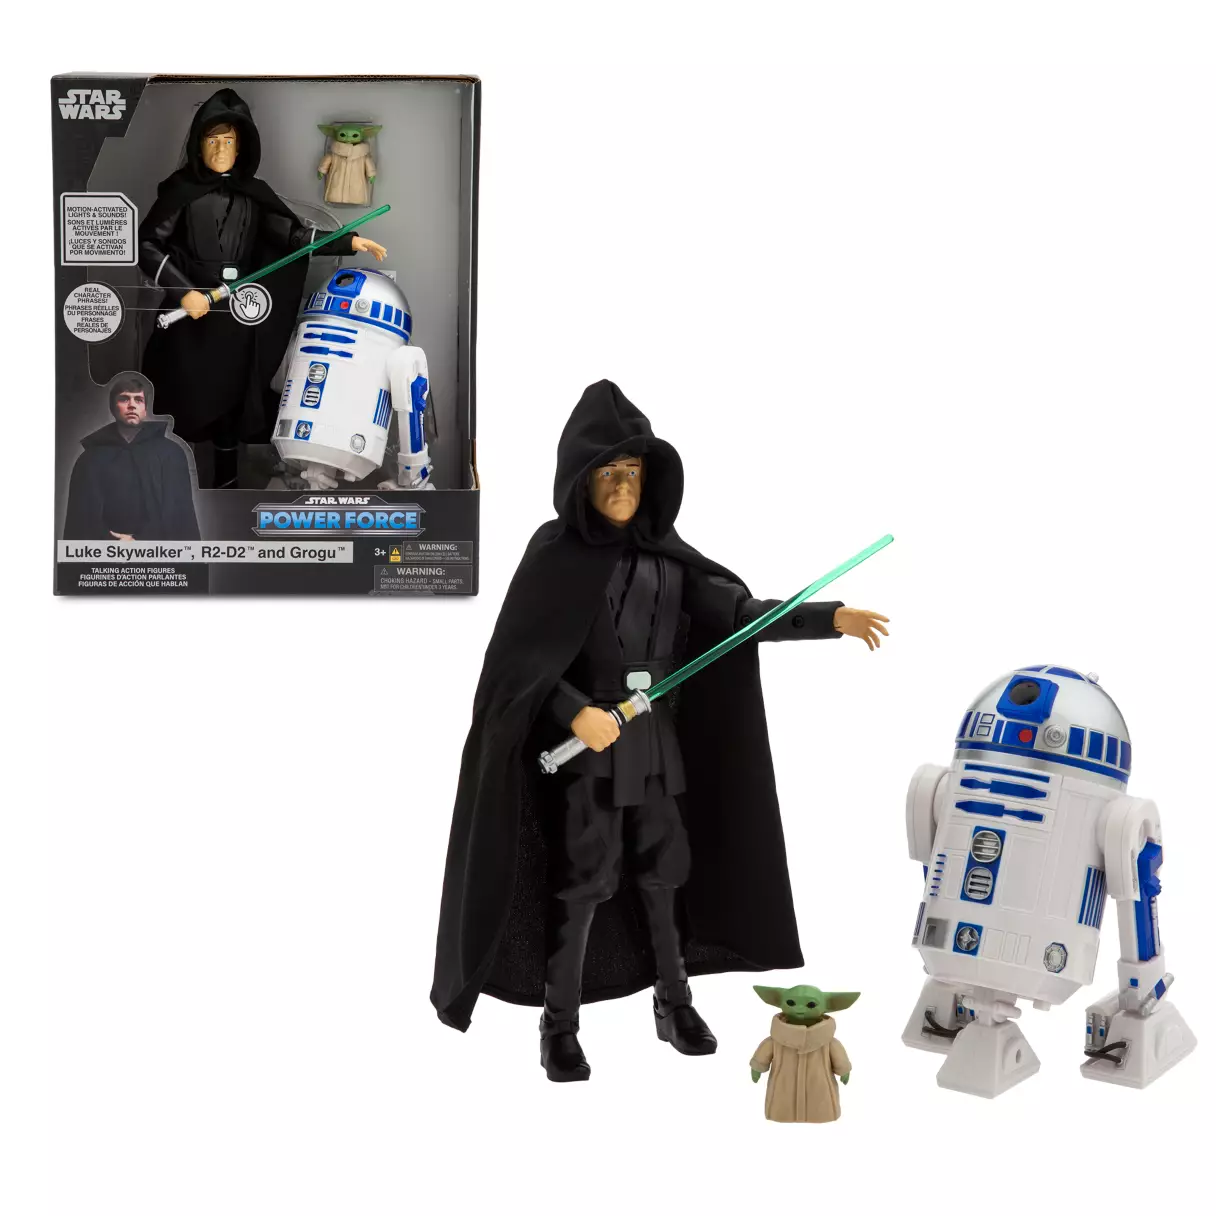 TM Luke Skywalker, R2-D2, and The Child (Grogu) Talking Figure Set 2